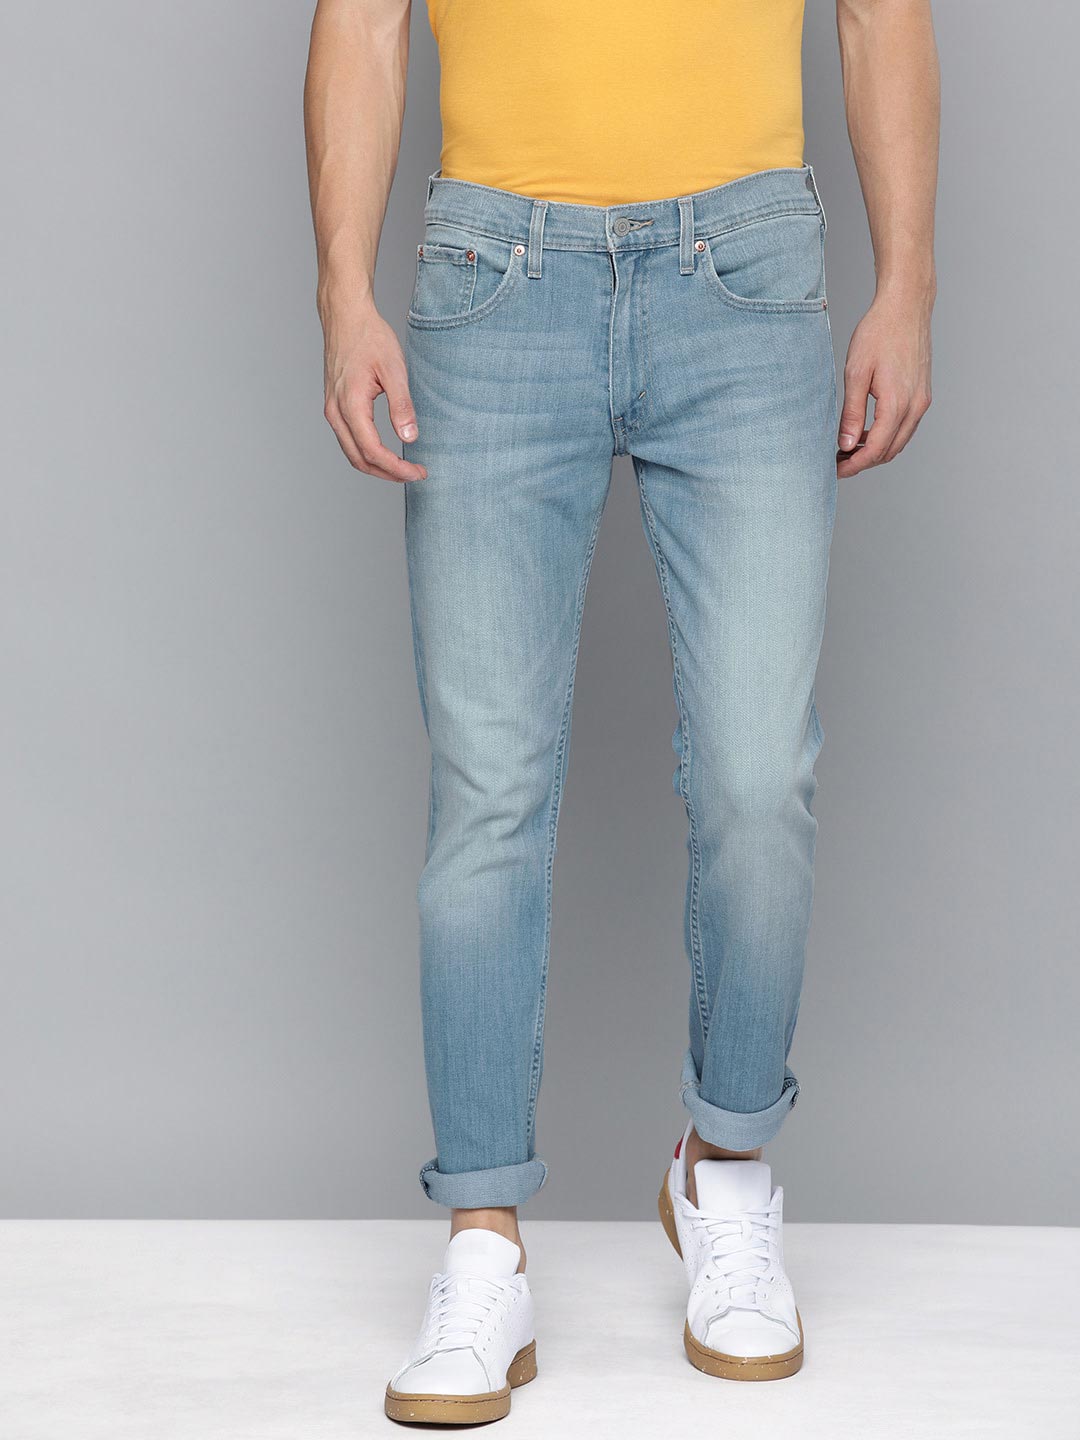 levis 65504 skinny fit men's jeans